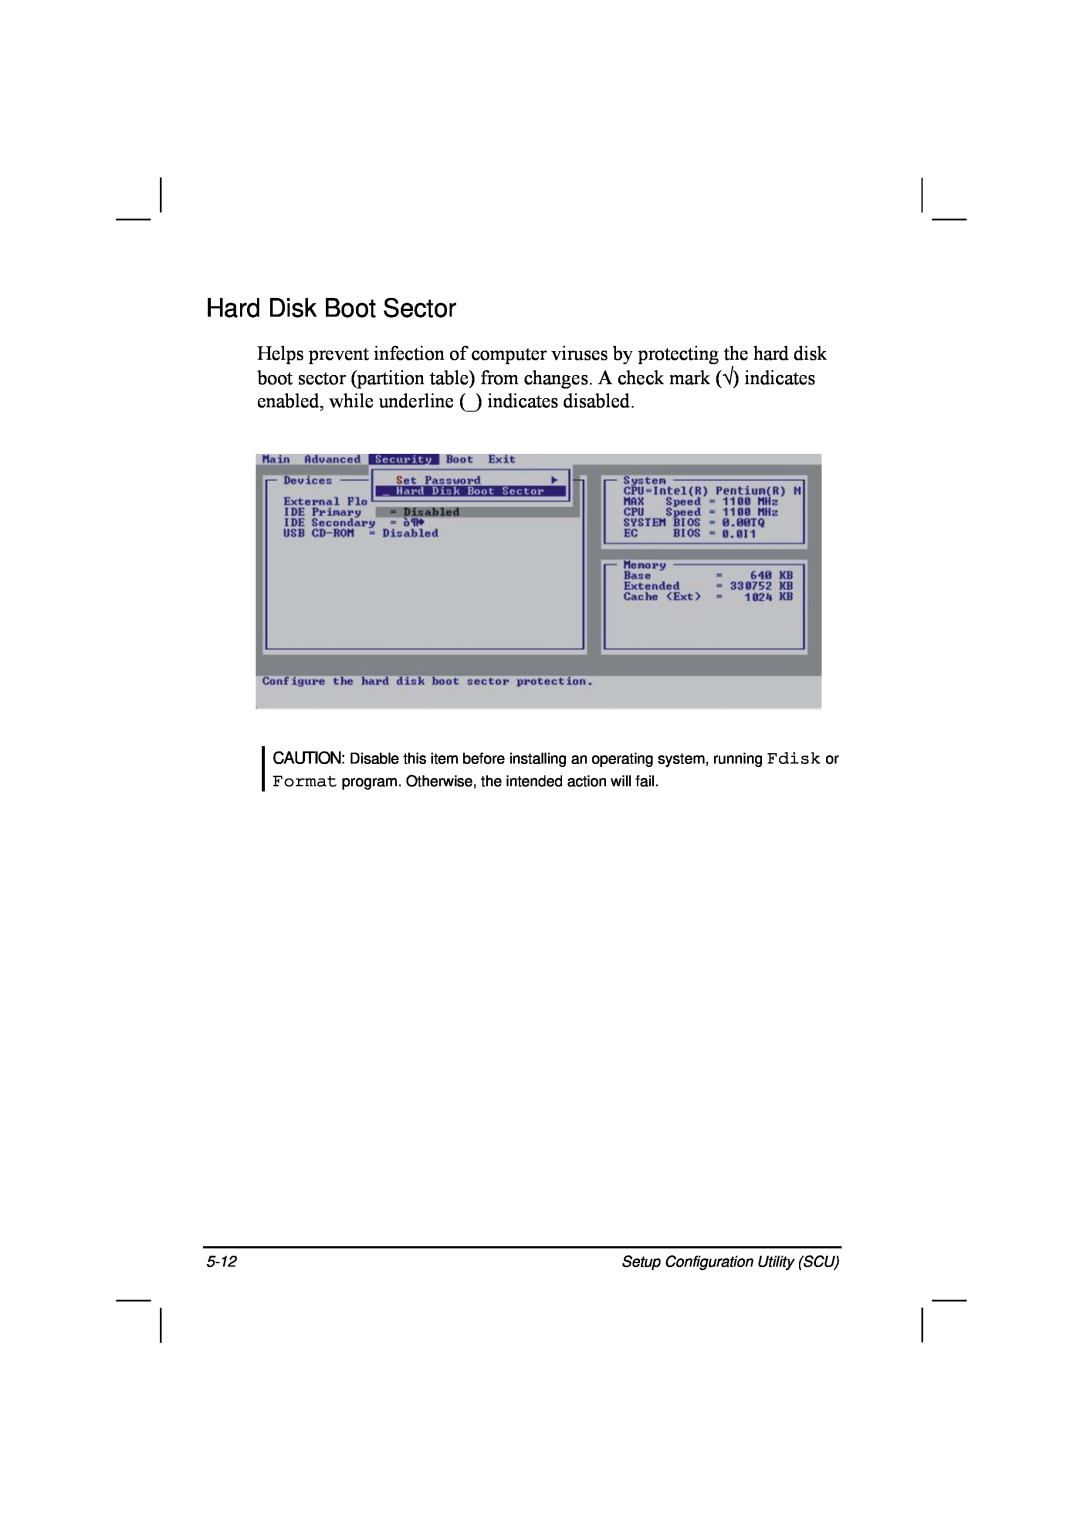 TAG 20 Series manual Hard Disk Boot Sector, 5-12, Setup Configuration Utility SCU 